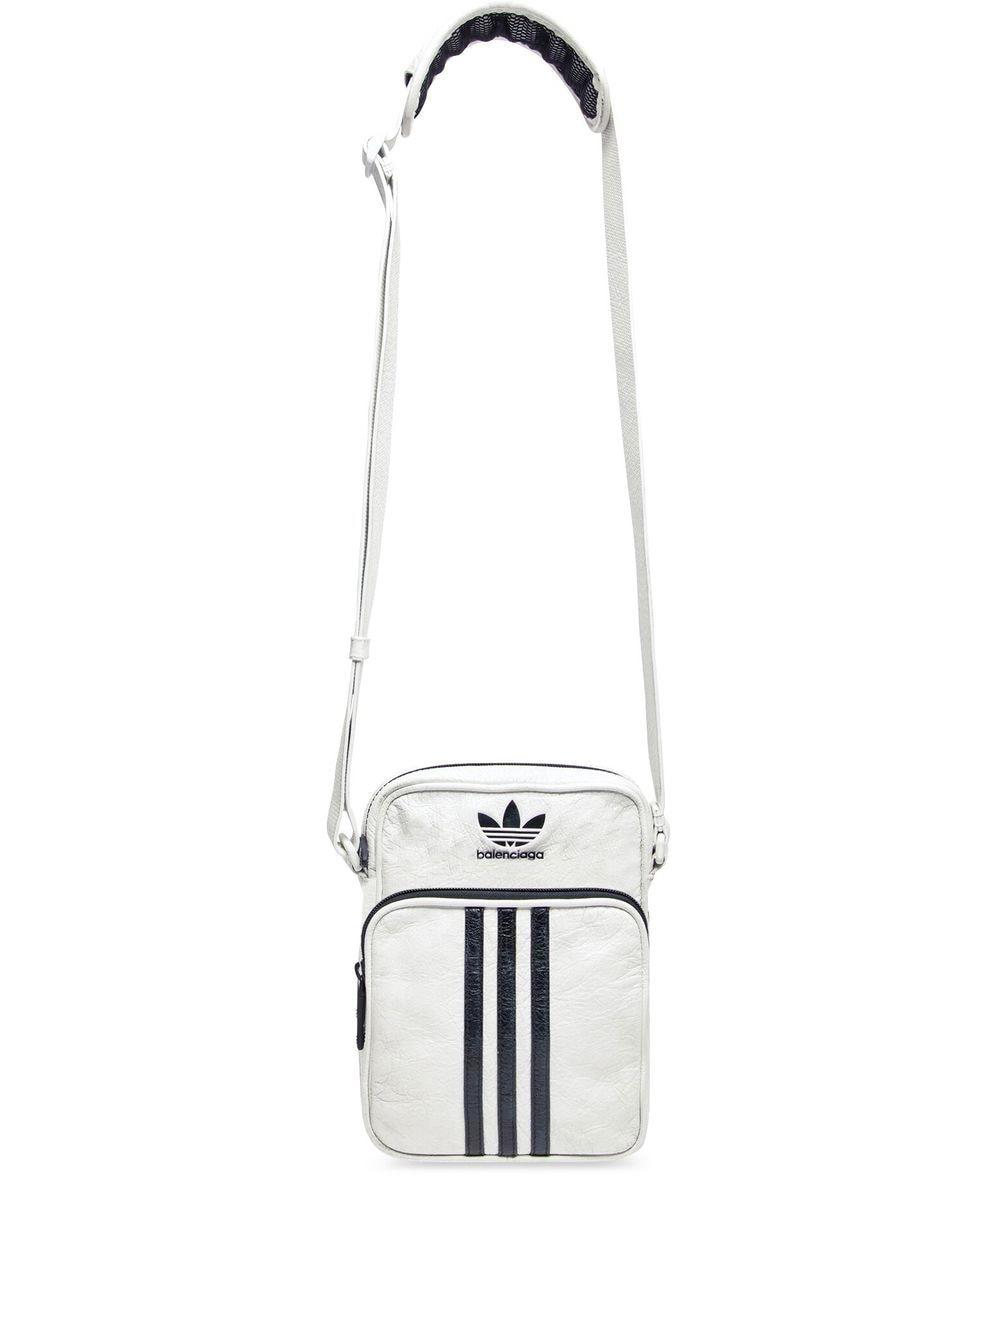 Balenciaga X Adidas Crossbody Messenger Bag in White for Men | Lyst